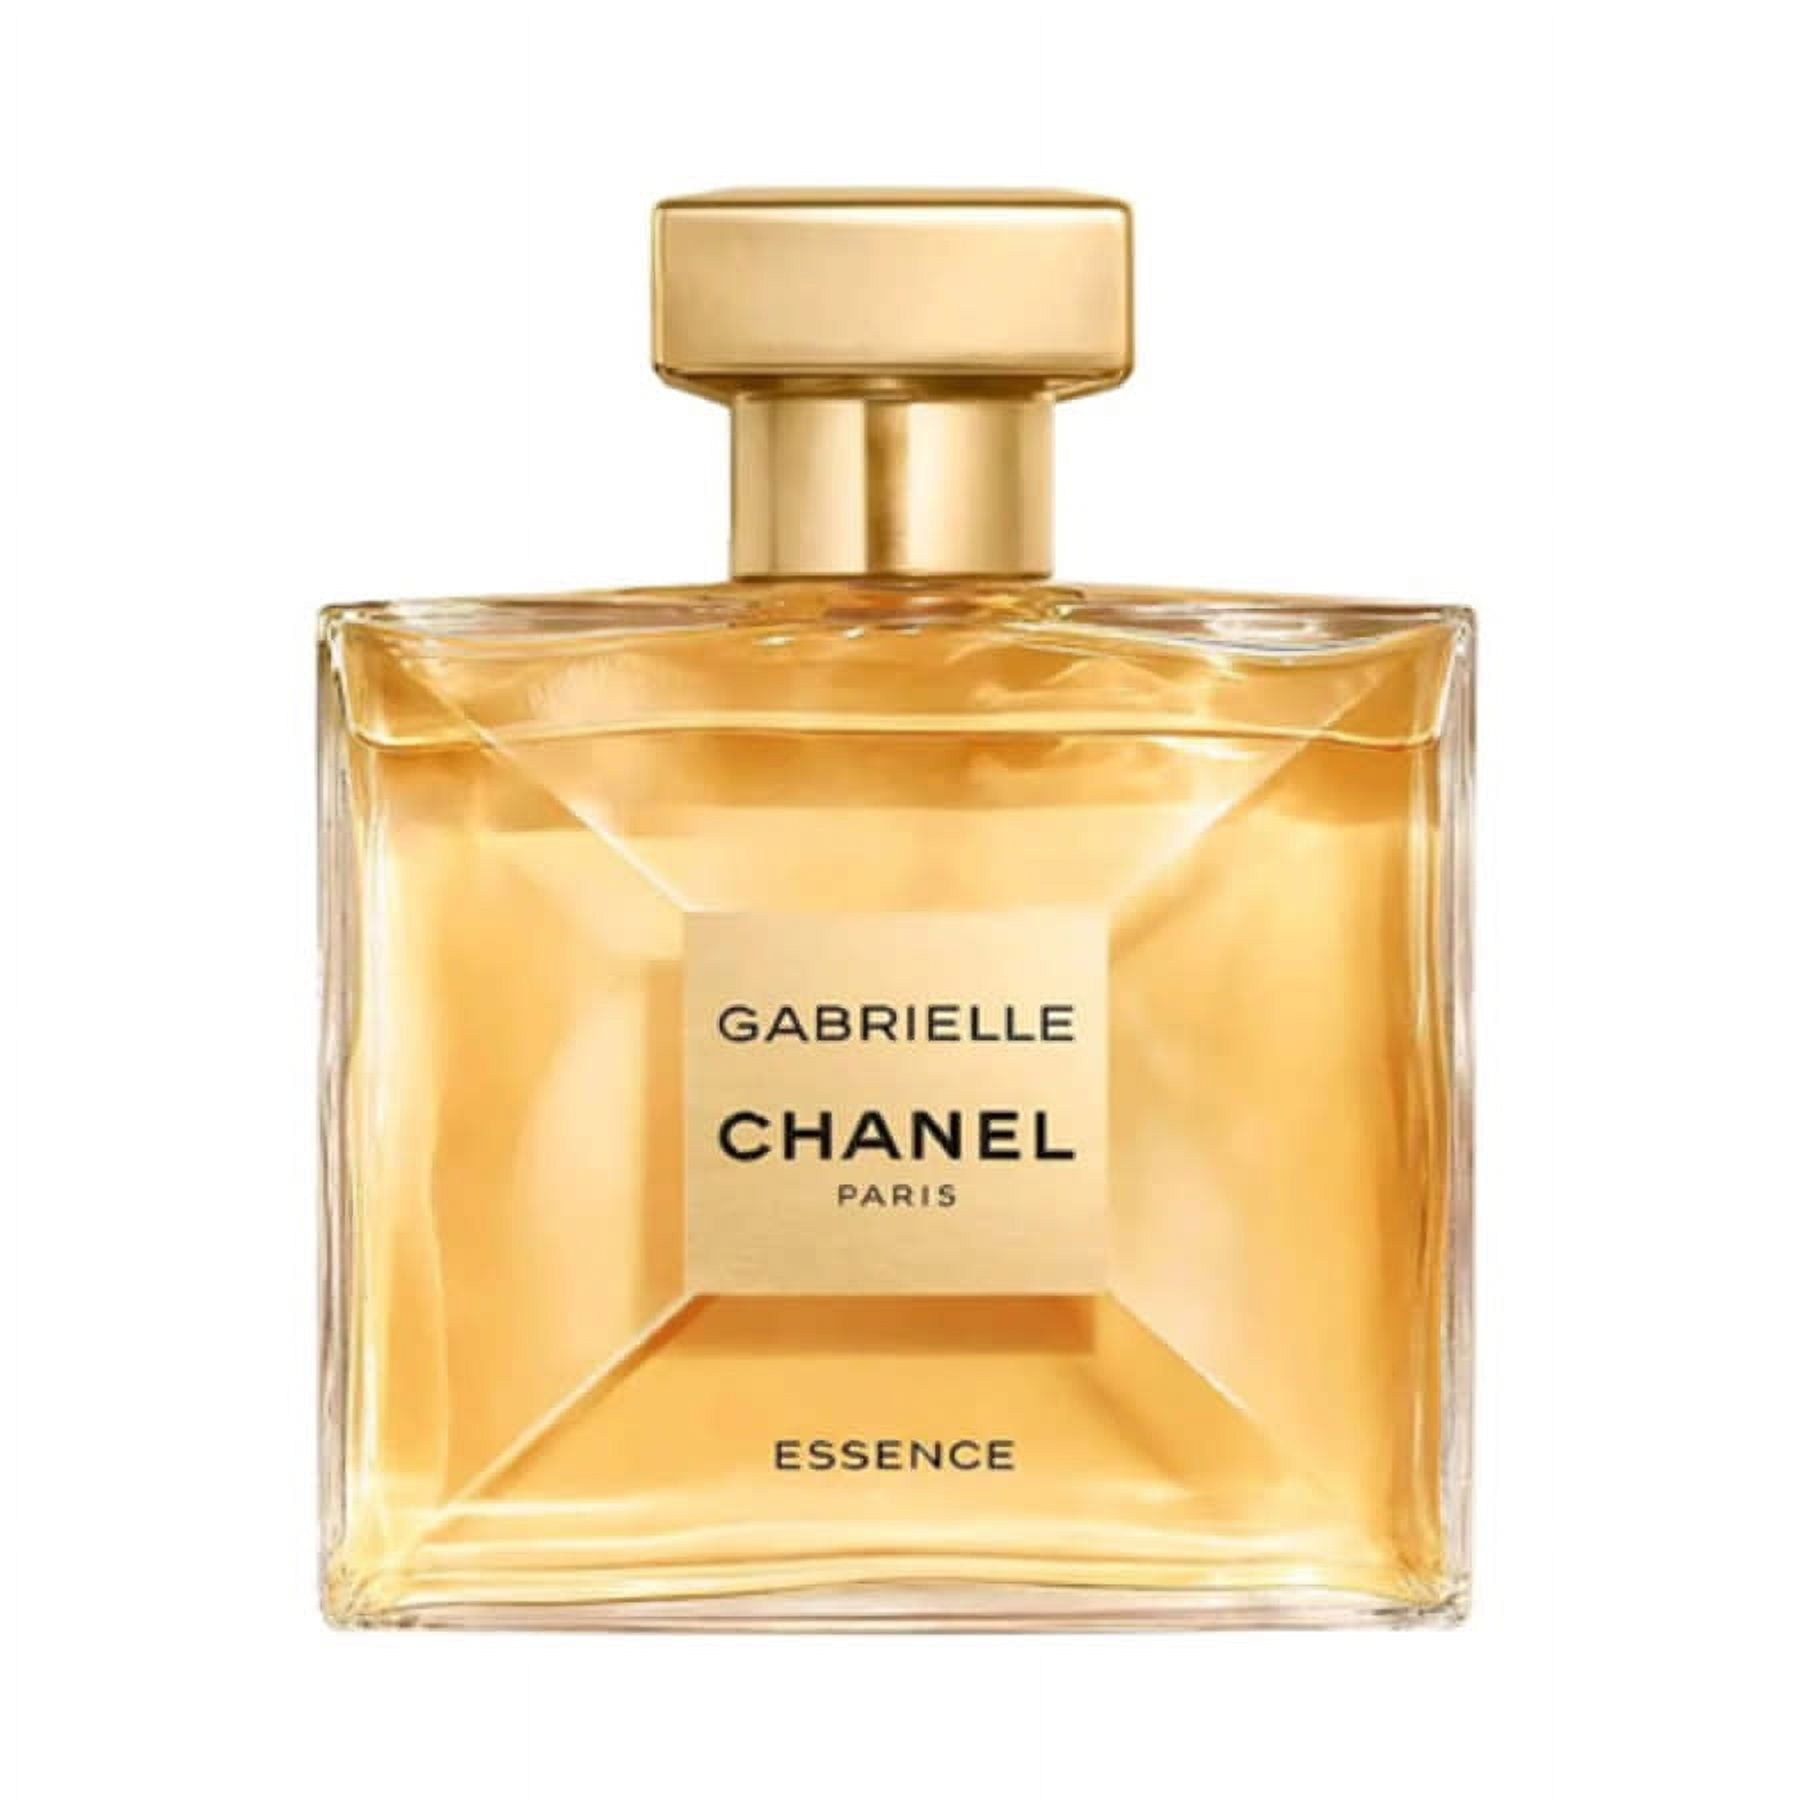 Gabrielle by Chanel Eau De Parfum Spray 3.4 oz